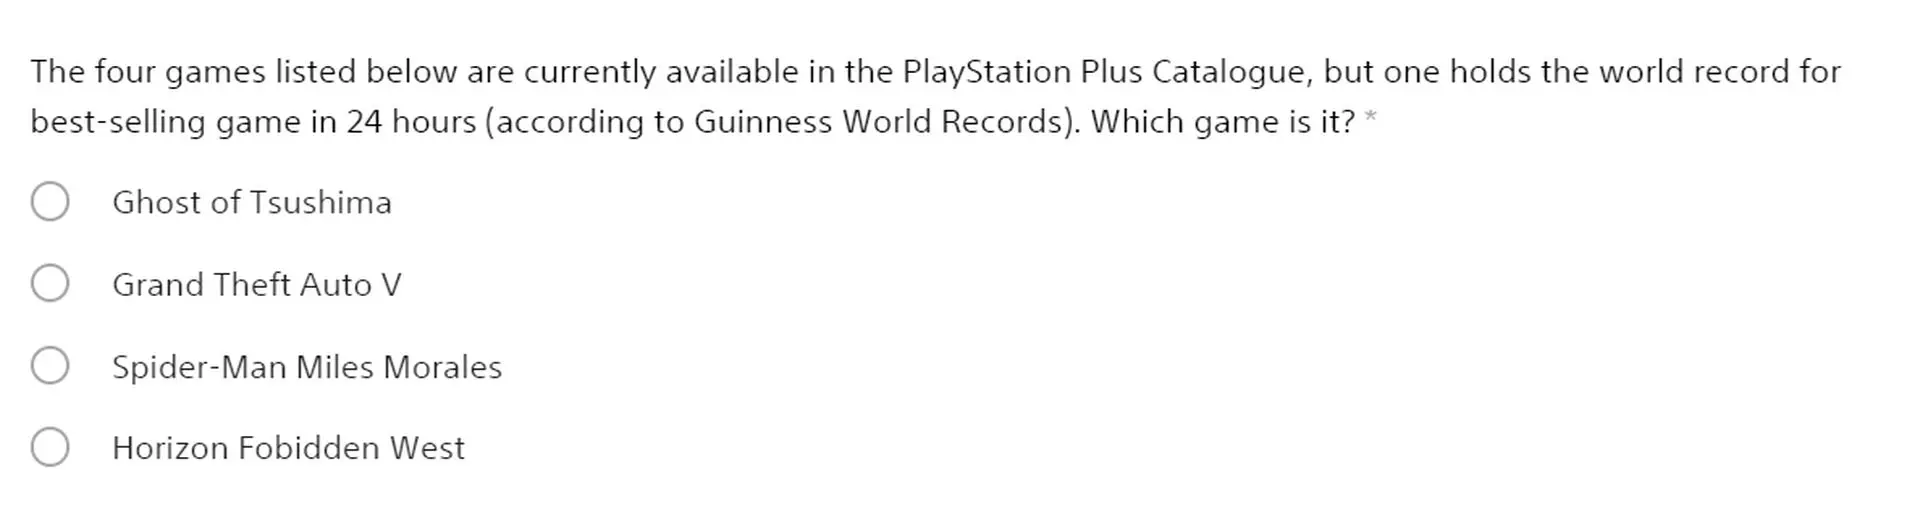 PlayStation Plus 축하 답변